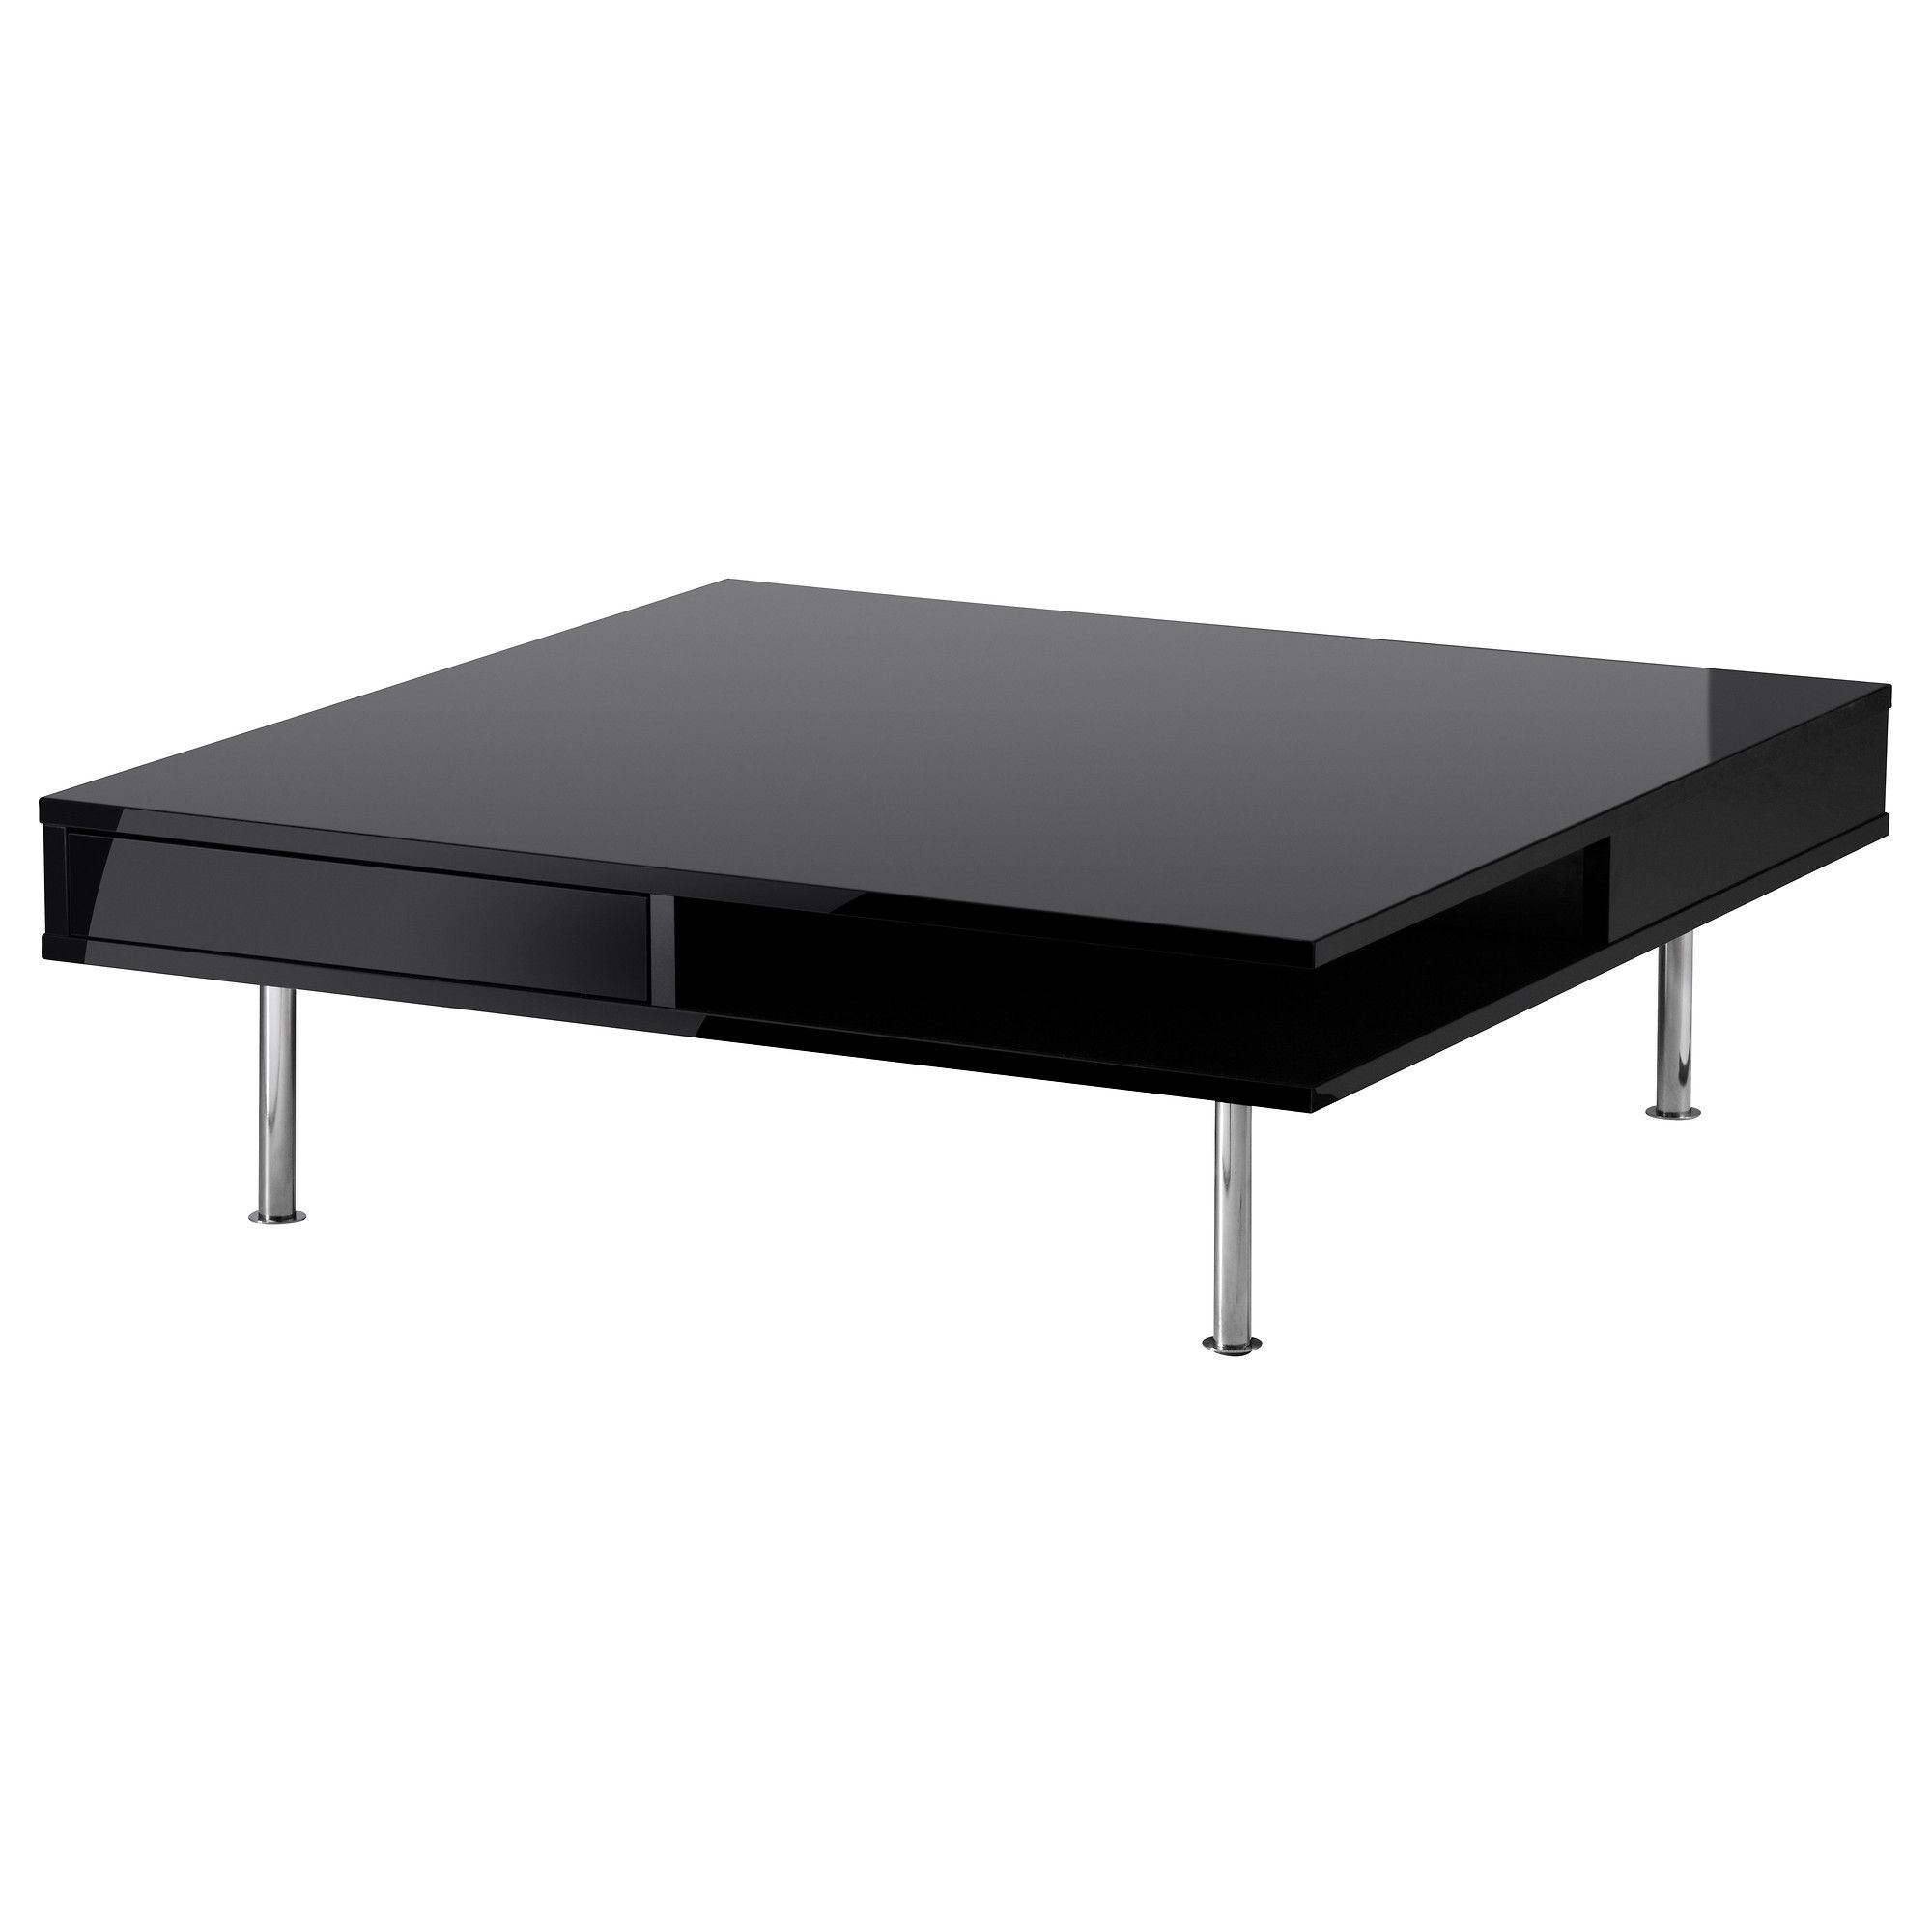 Tofteryd Coffee Table High Gloss Black 95x95 Cm | Ikea Lietuva For High Gloss Coffee Tables (View 1 of 20)